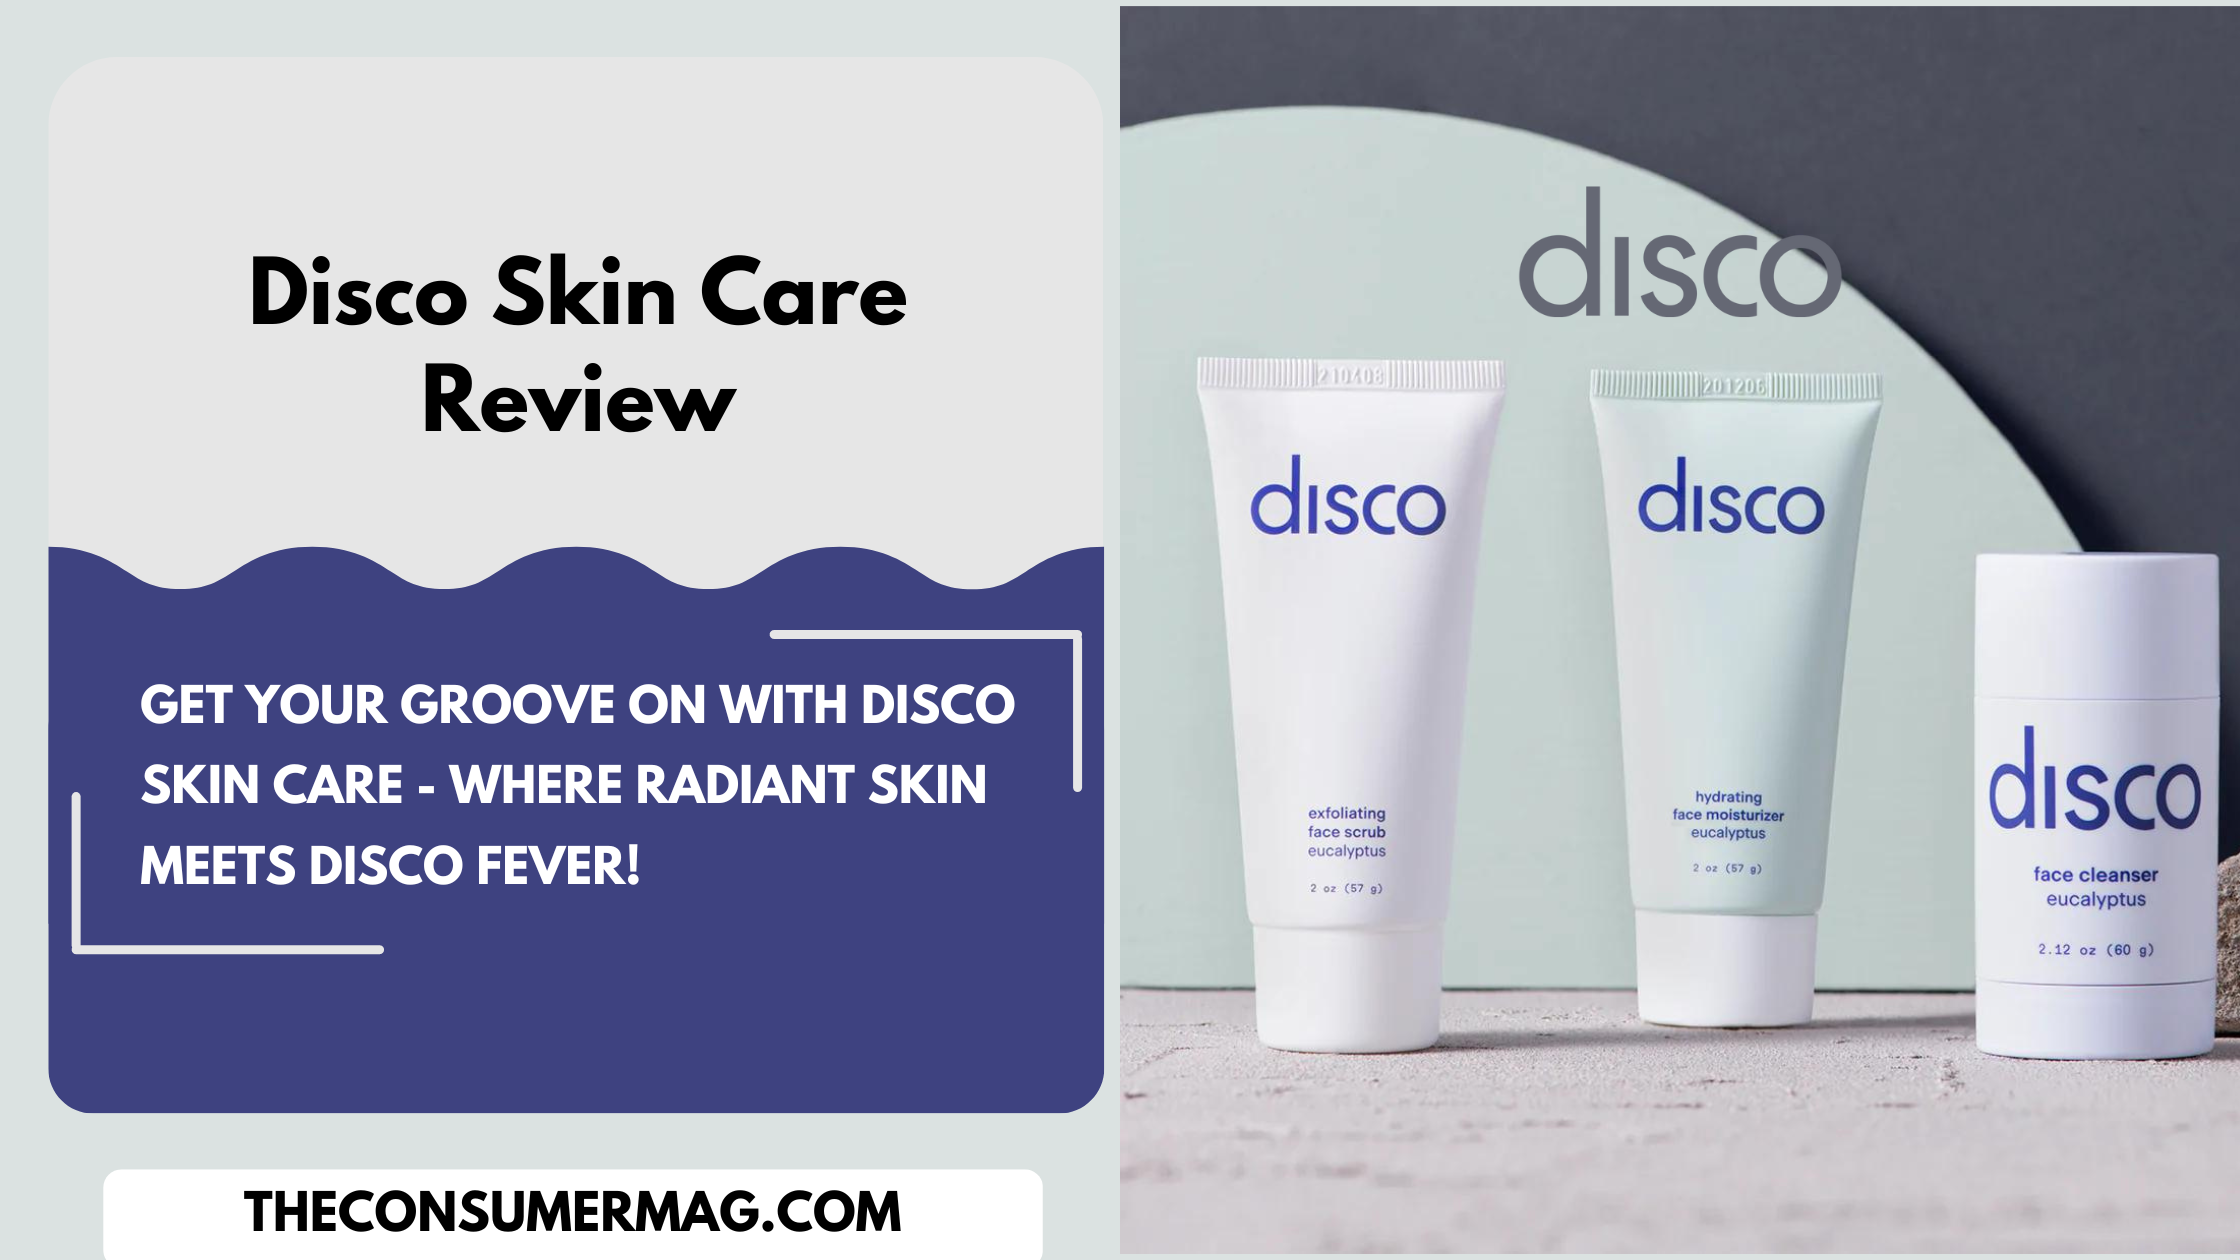 Disco Skin Care Featured Image